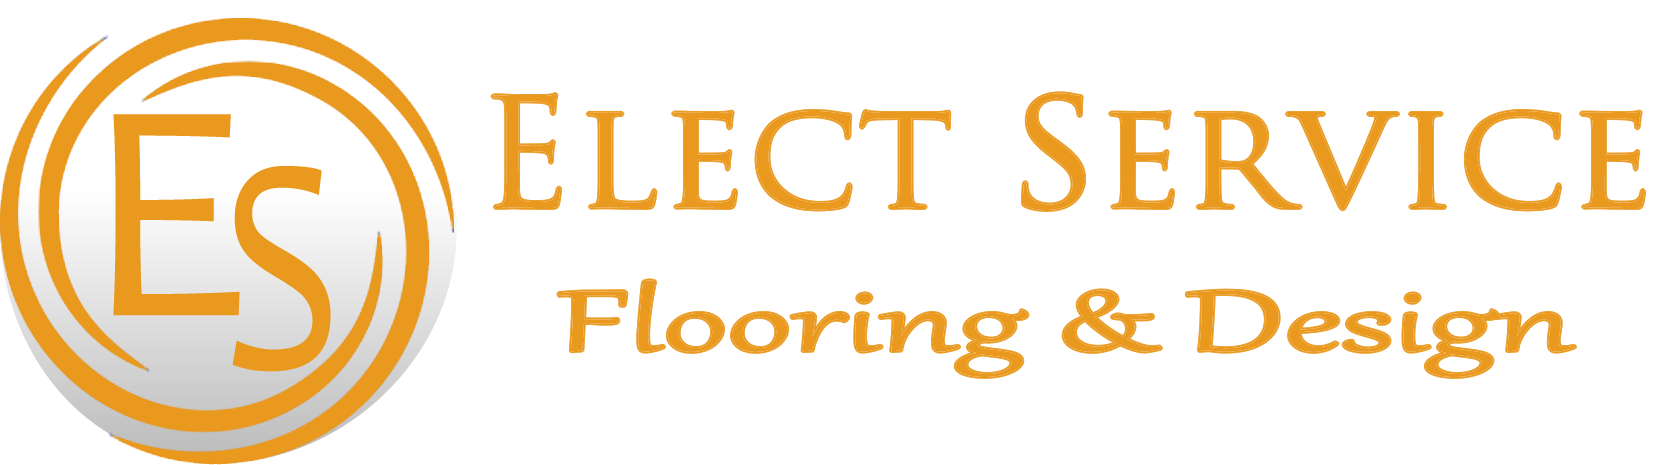 Elect Service Flooring